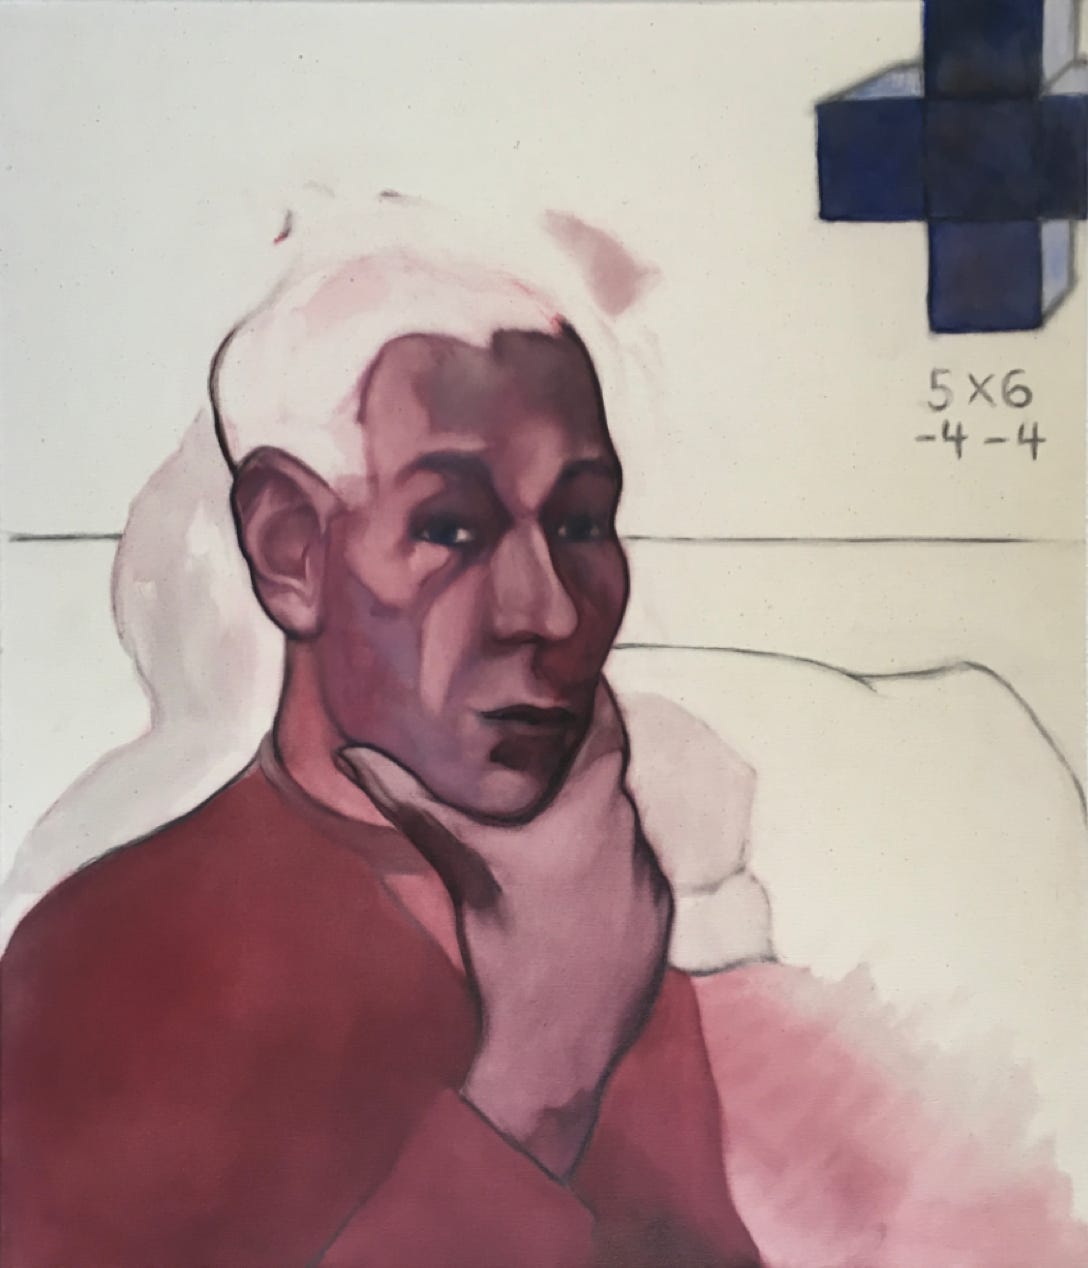 70x60 cm, oil on canvas, 2019